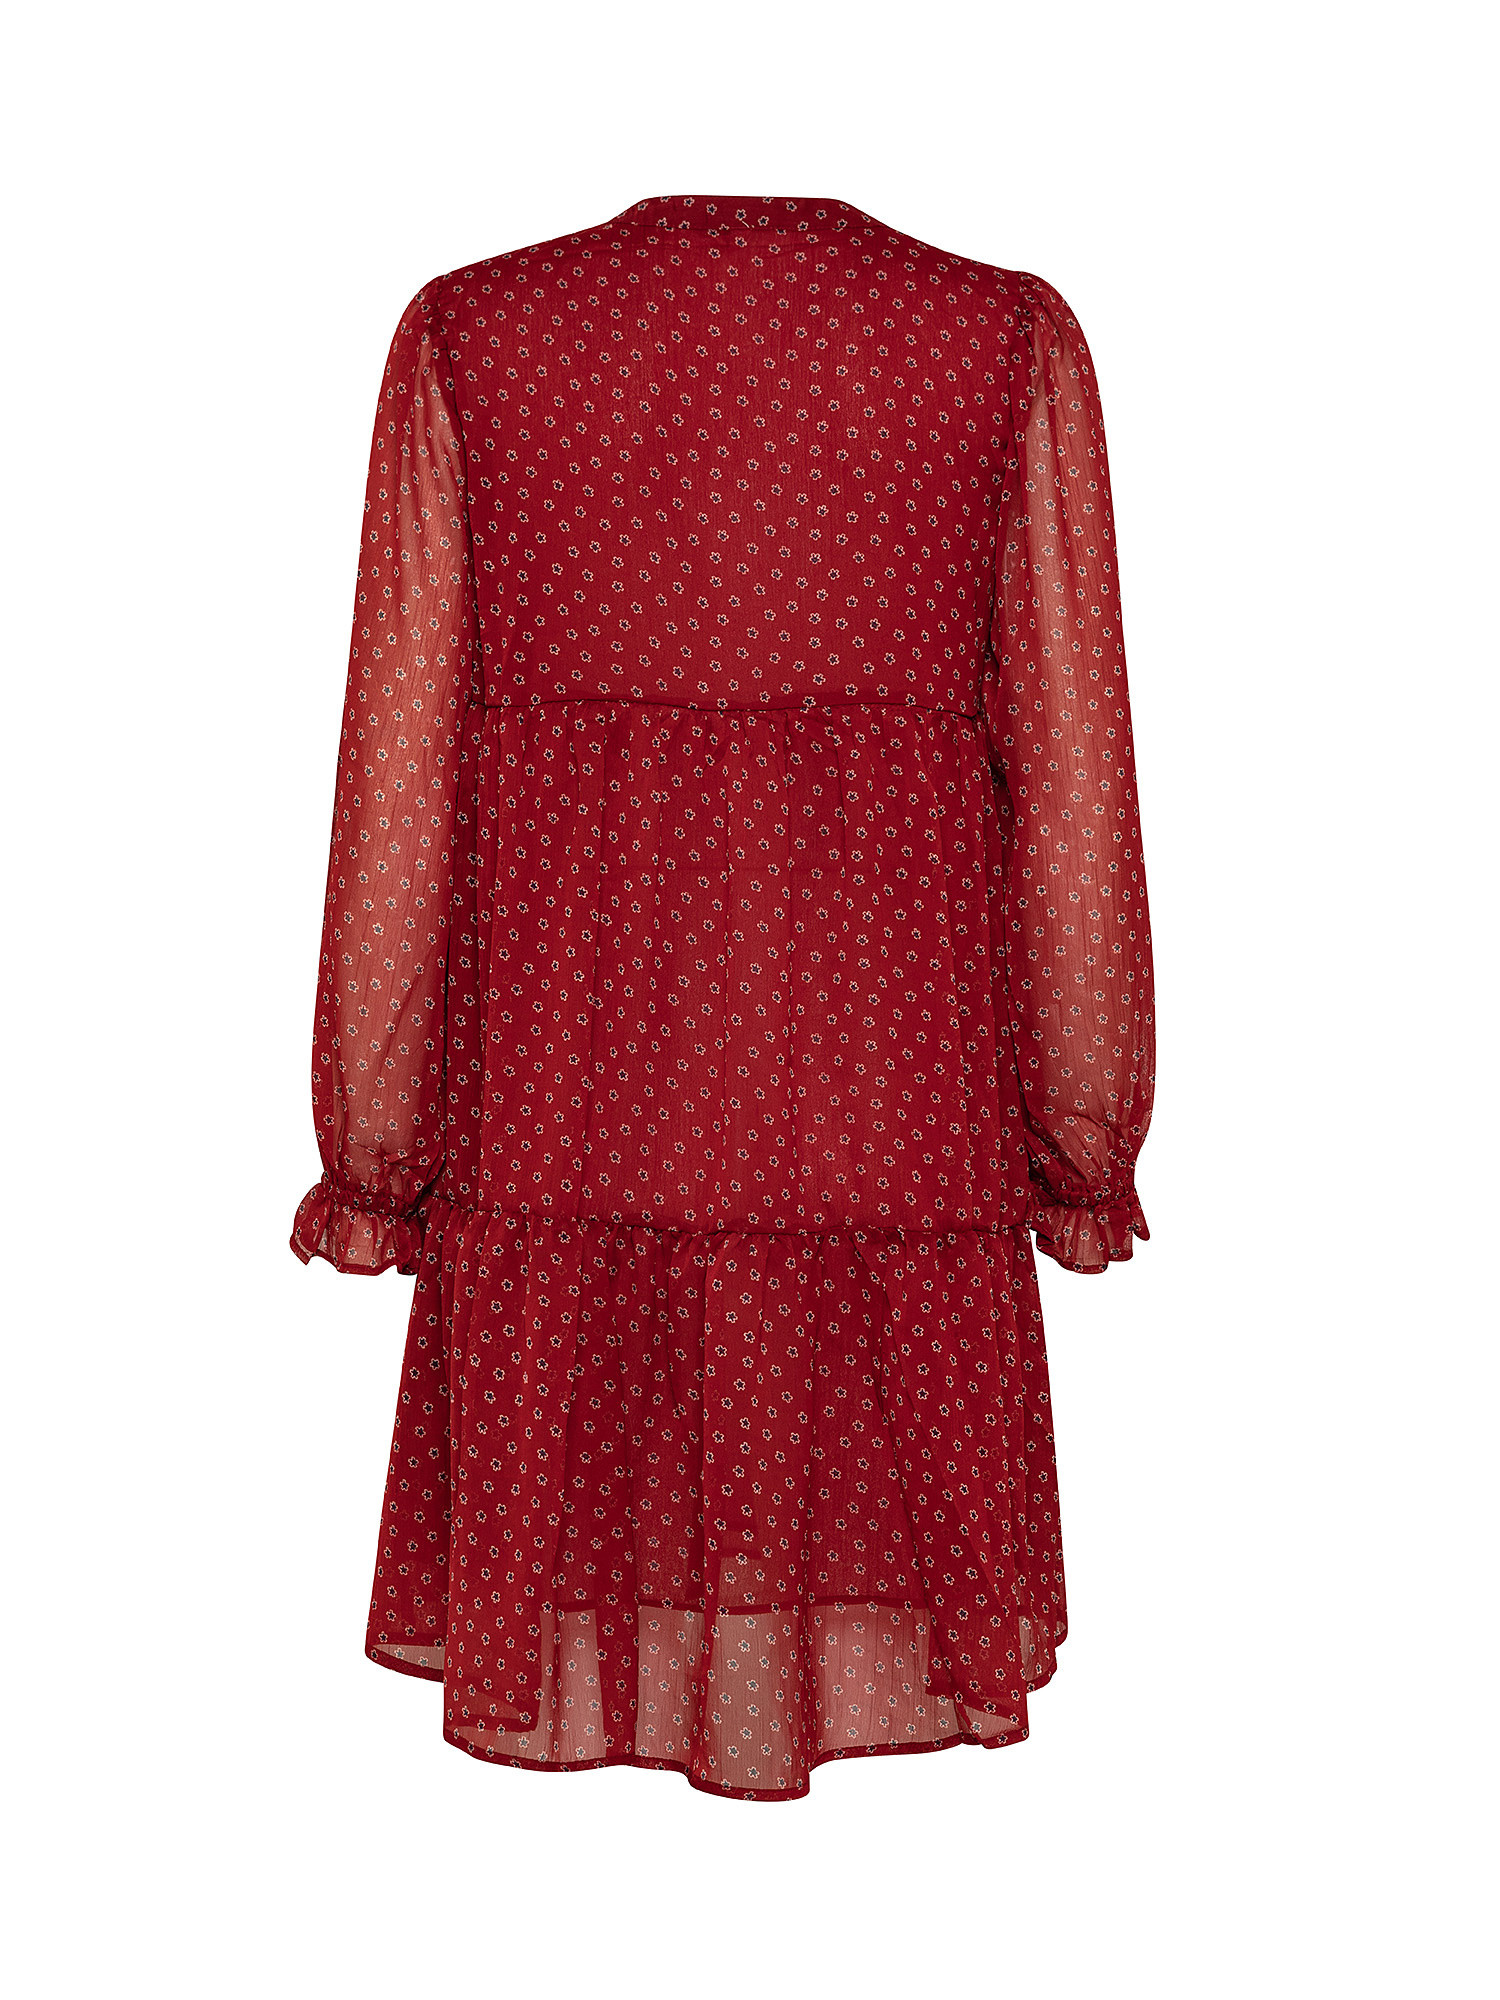 Eleonora short dress, Brick Red, large image number 1